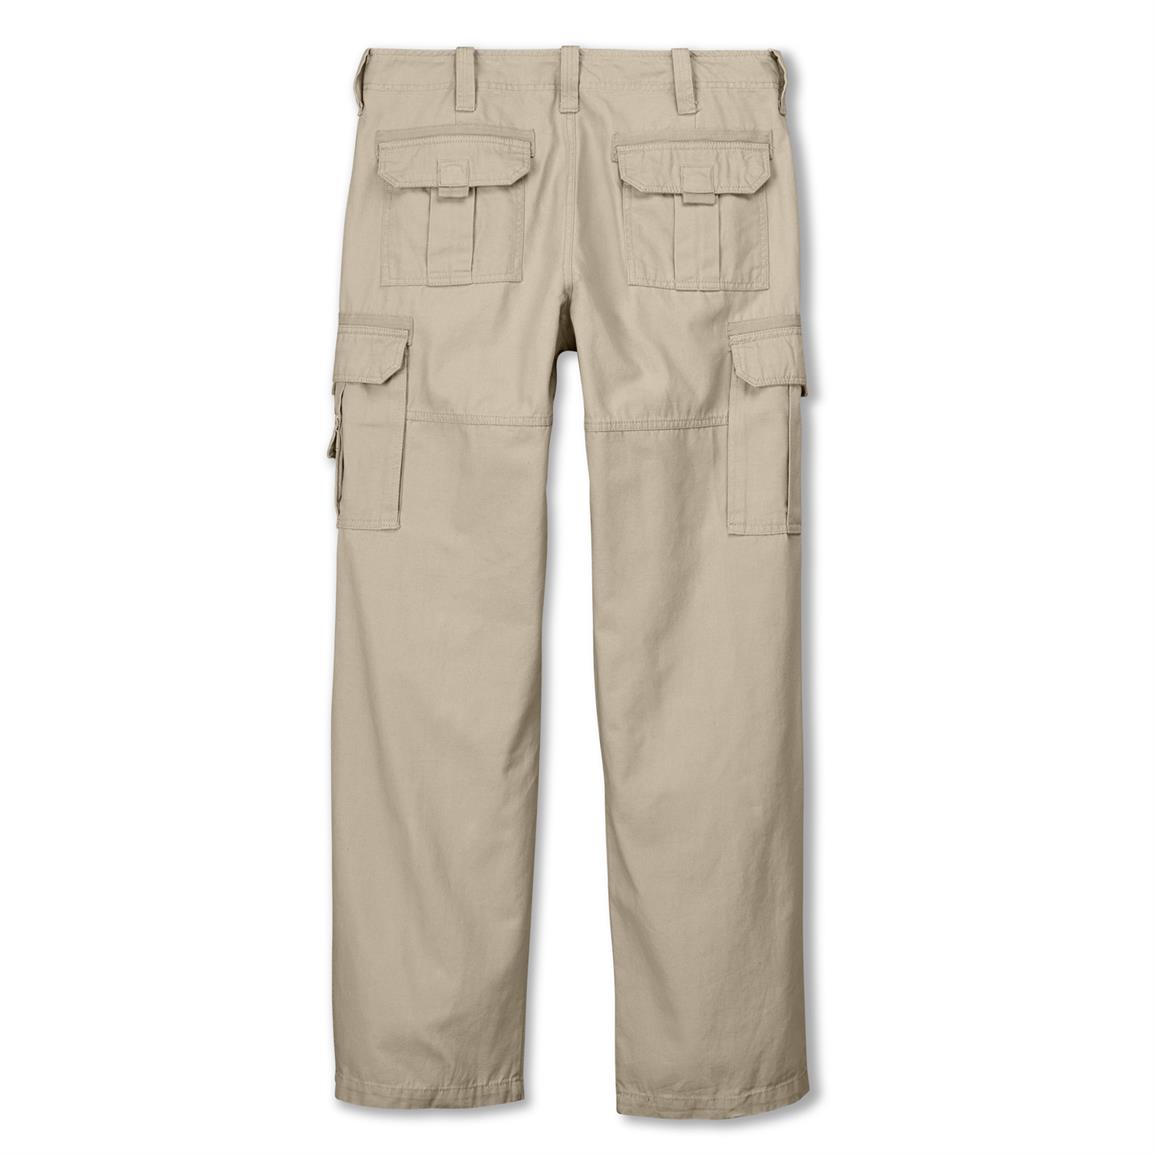 Guide Gear Men's Cargo Pants - 224167, Jeans & Pants at Sportsman's Guide